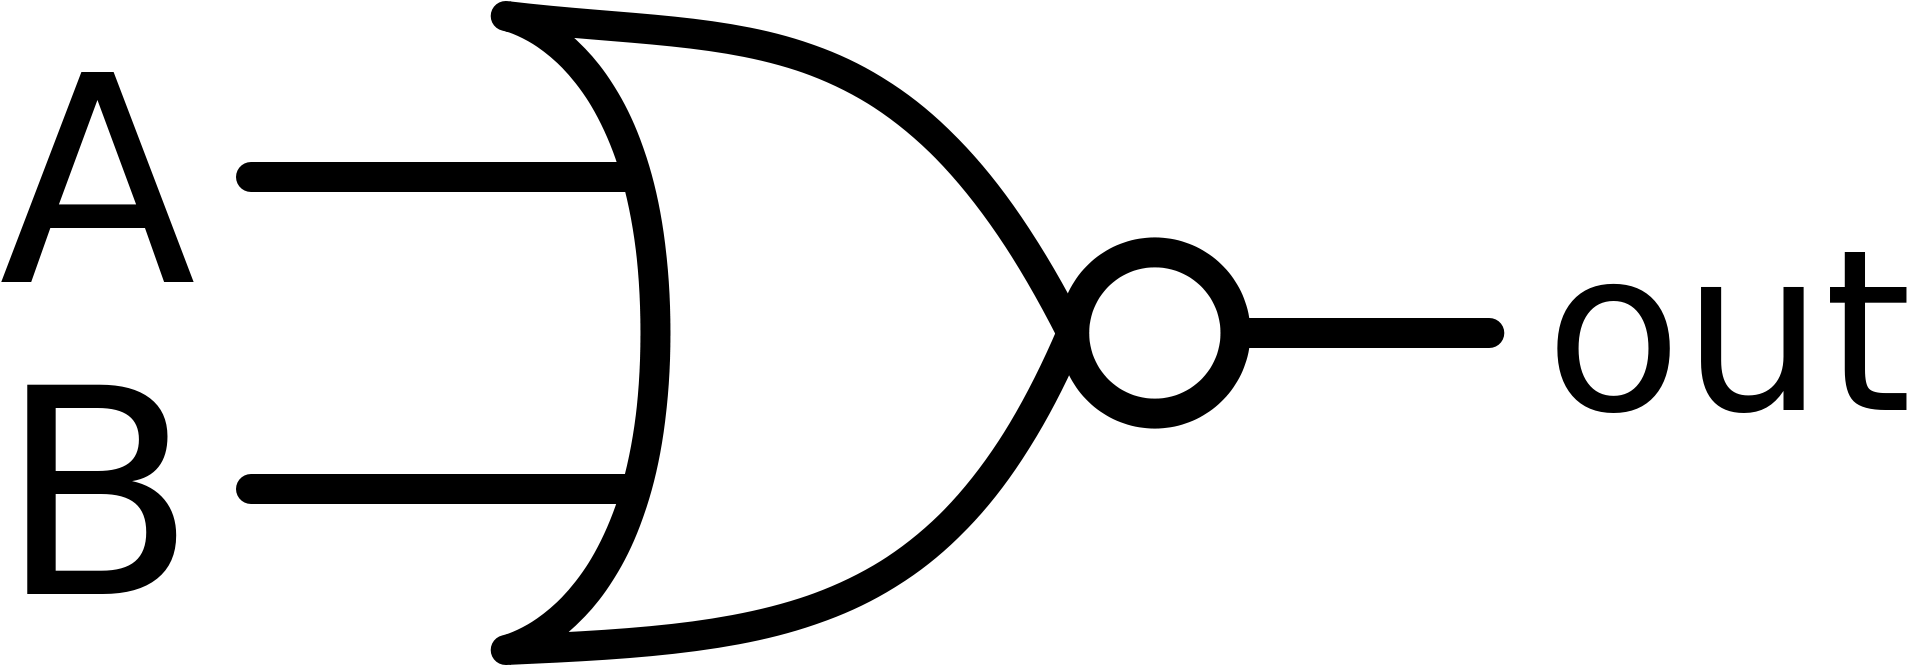 Or - 2 Input Or Gate Symbol (2000x720)